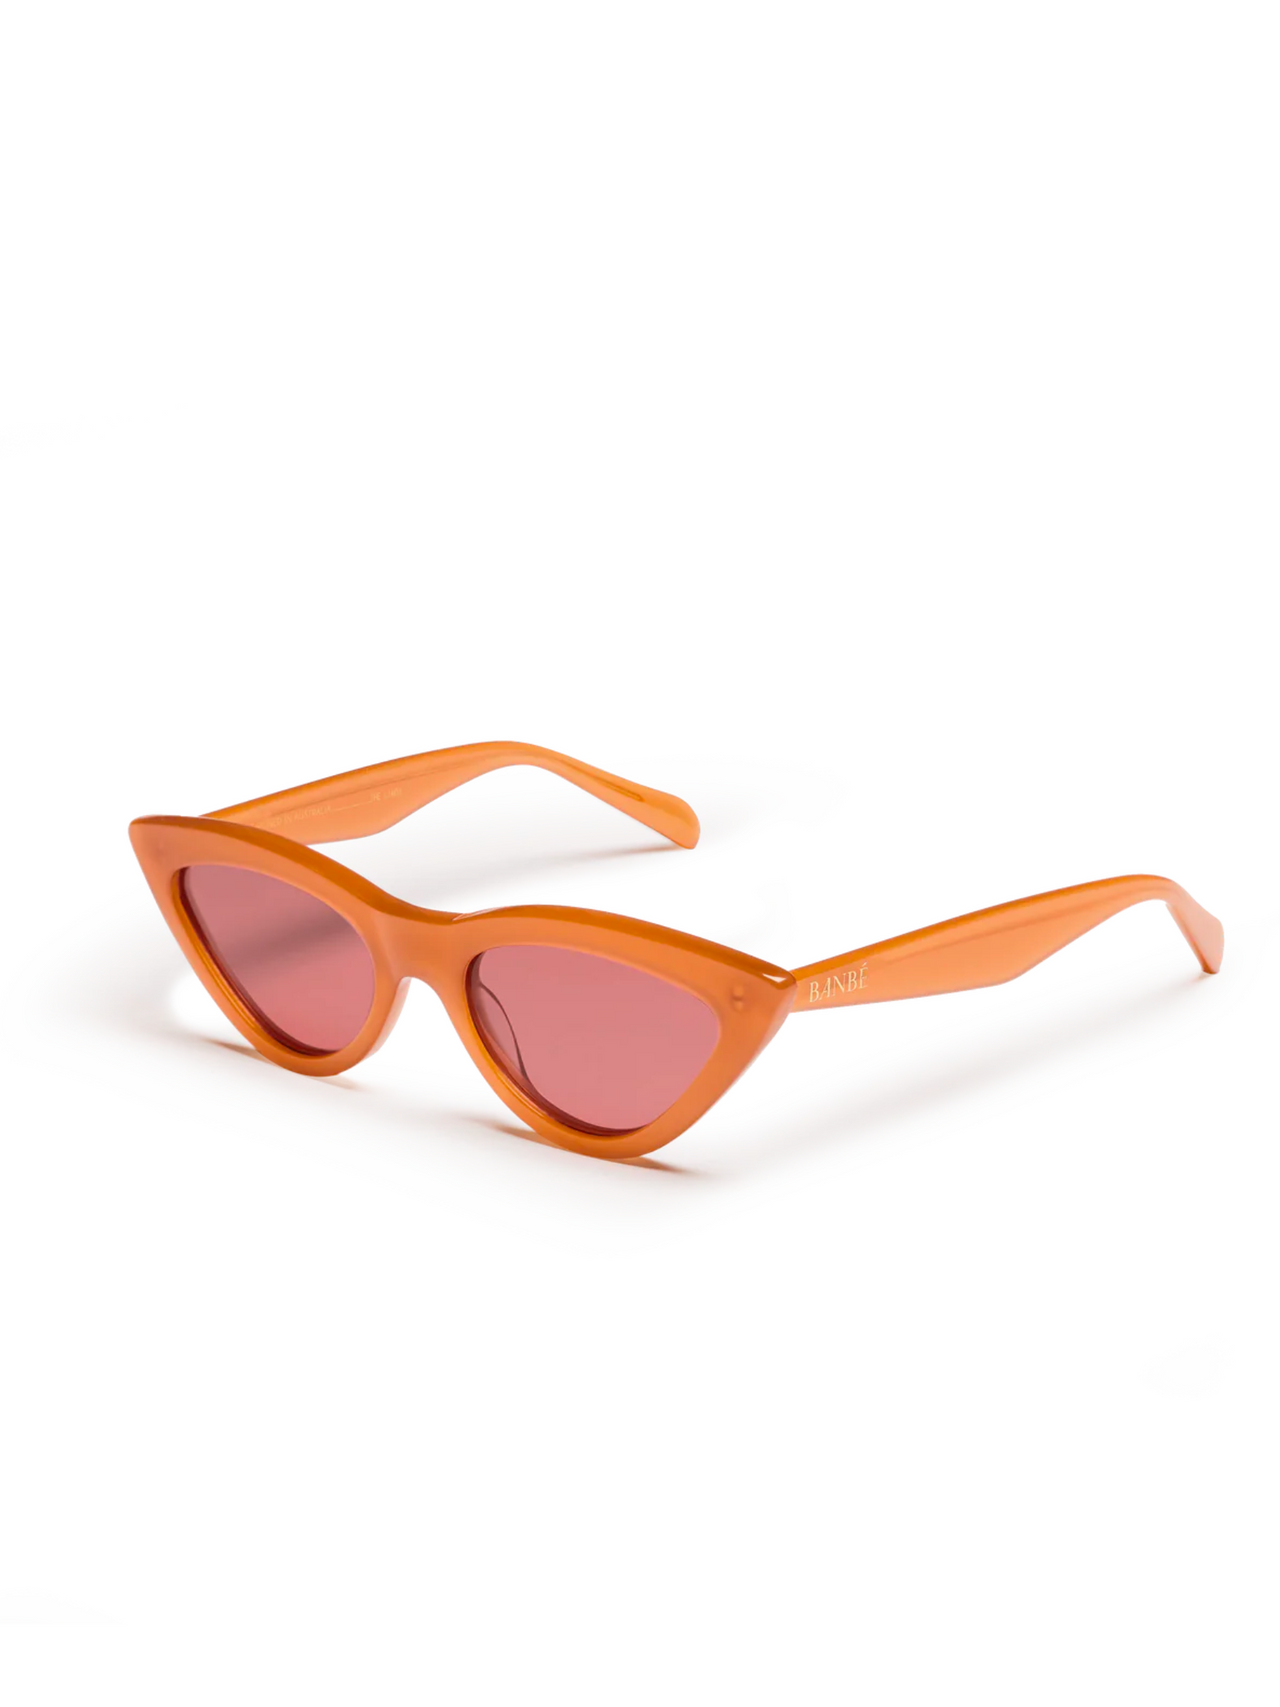 The Linda Sunglasses Burnt Orange, Sunglass Acc by BANBE Eyewear | LIT Boutique